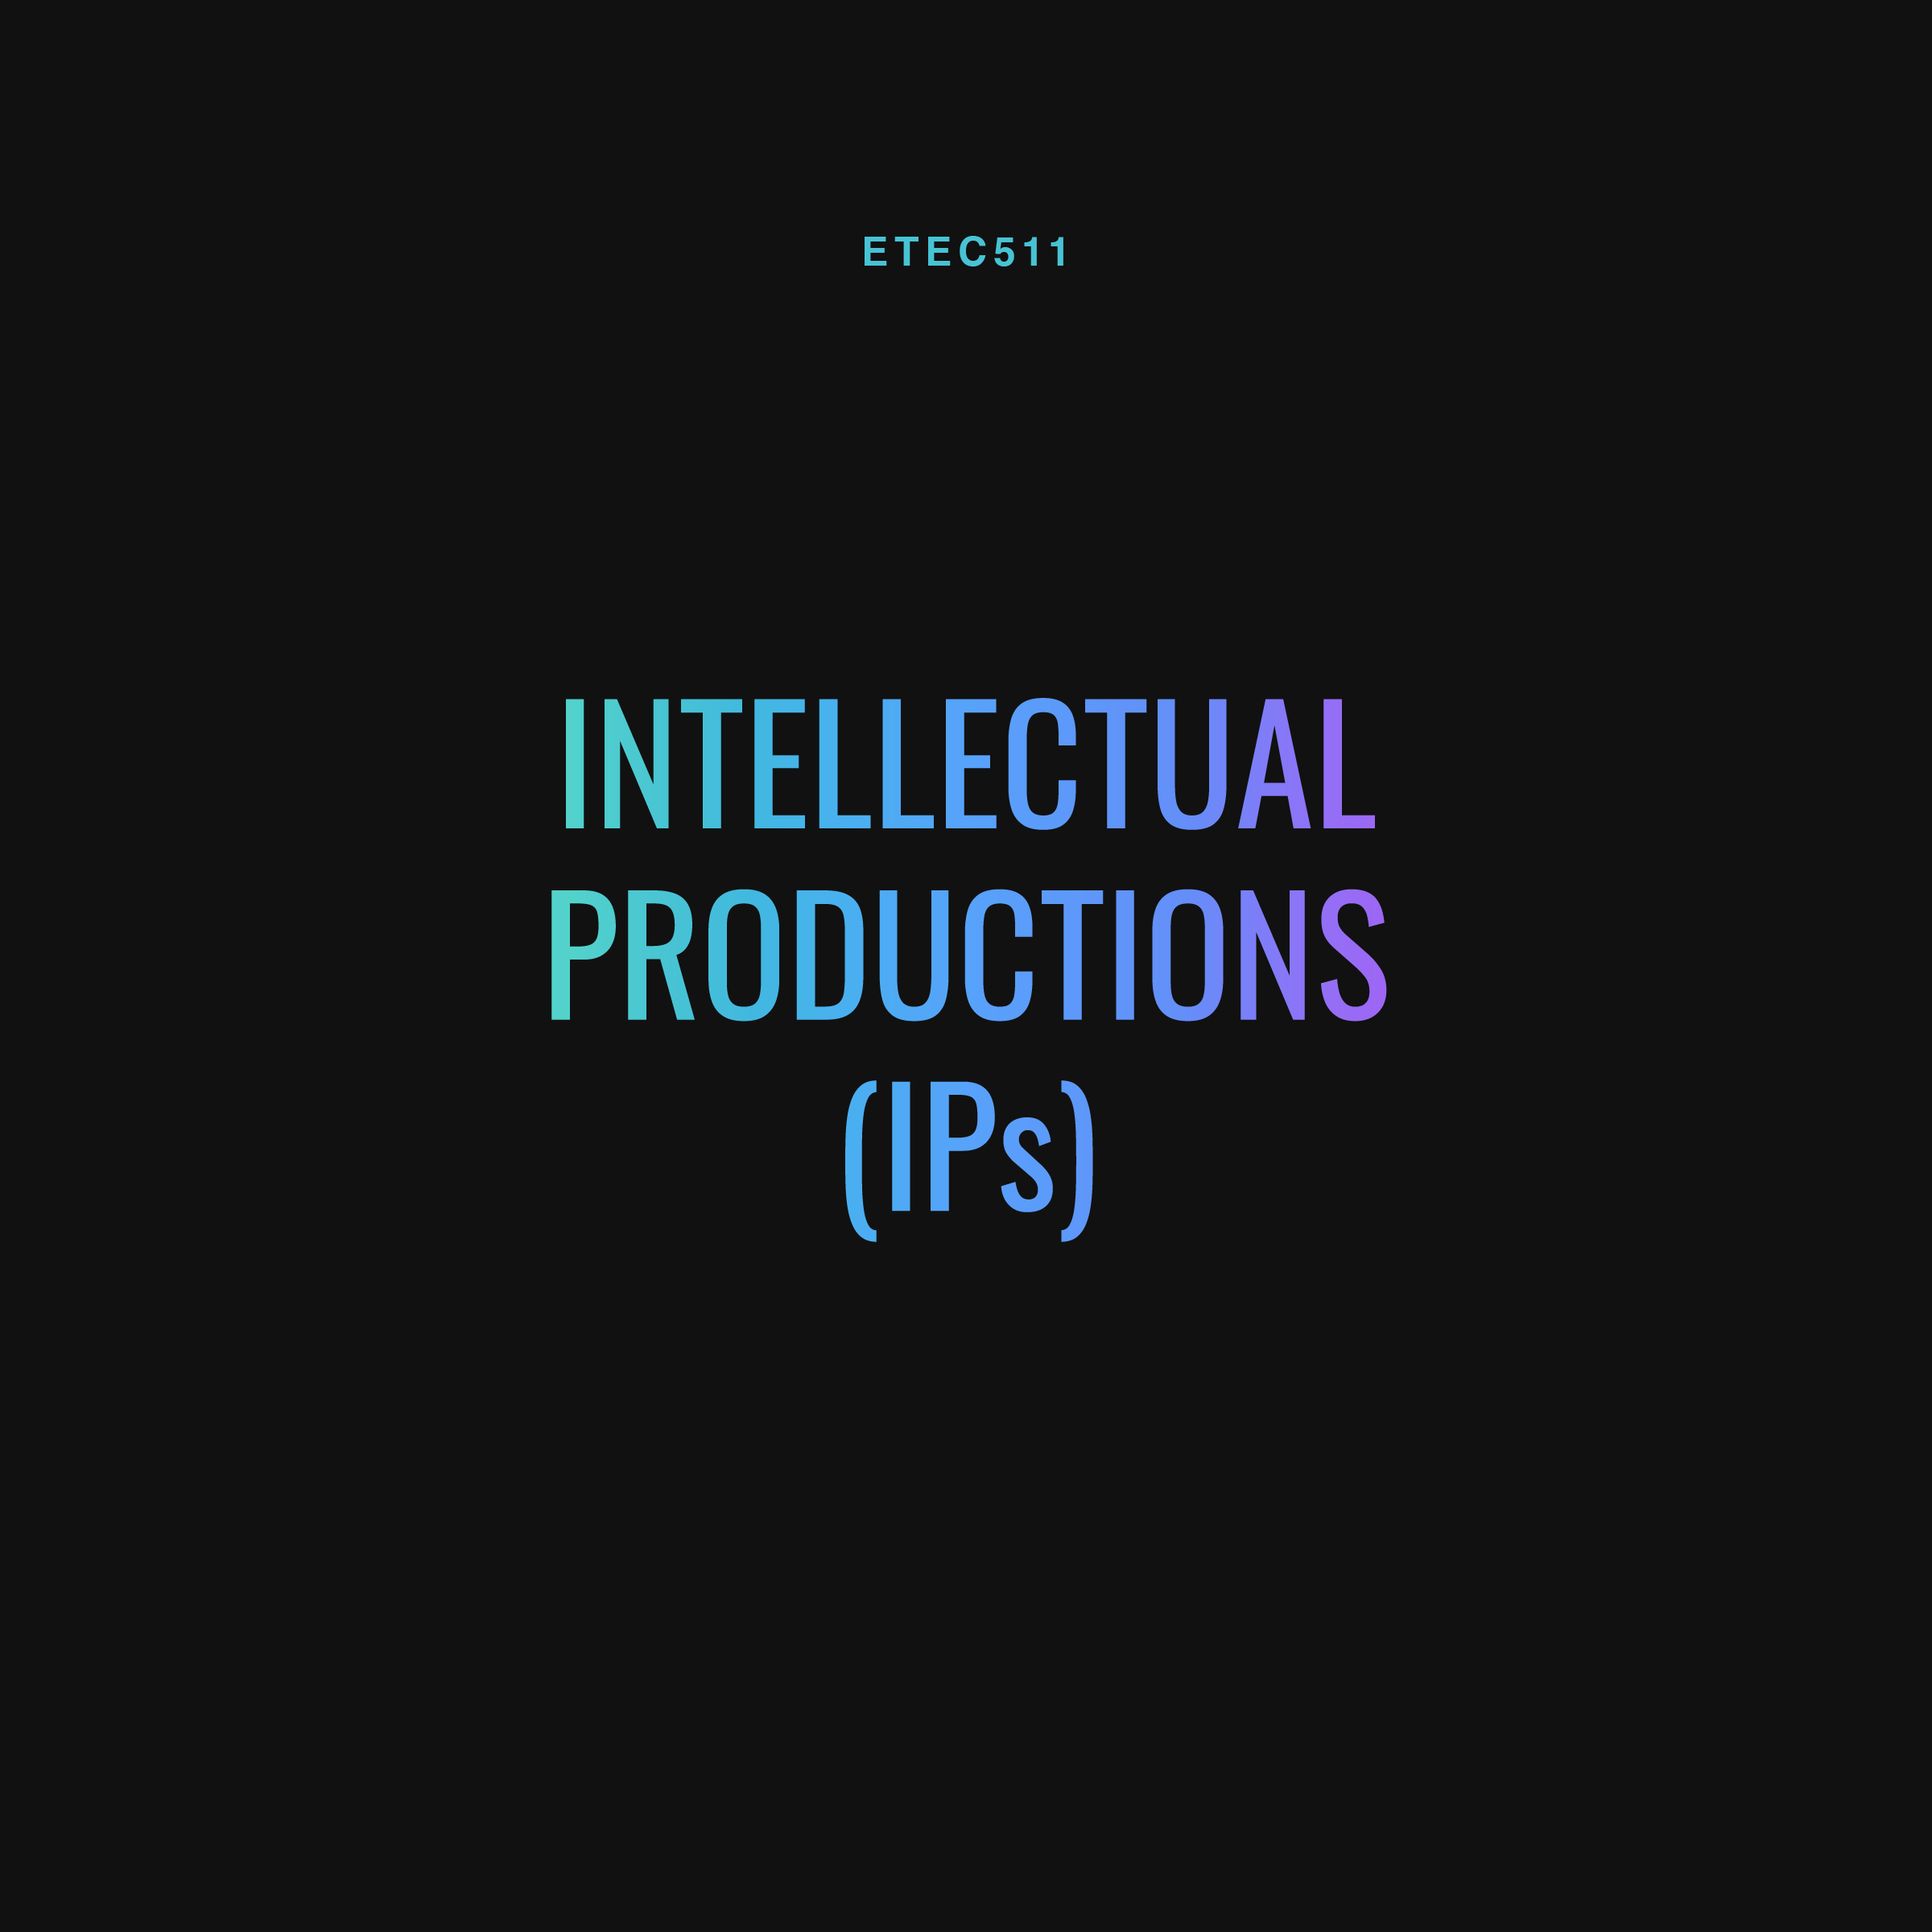 ETEC 511 - Intellectual Productions (IPs)